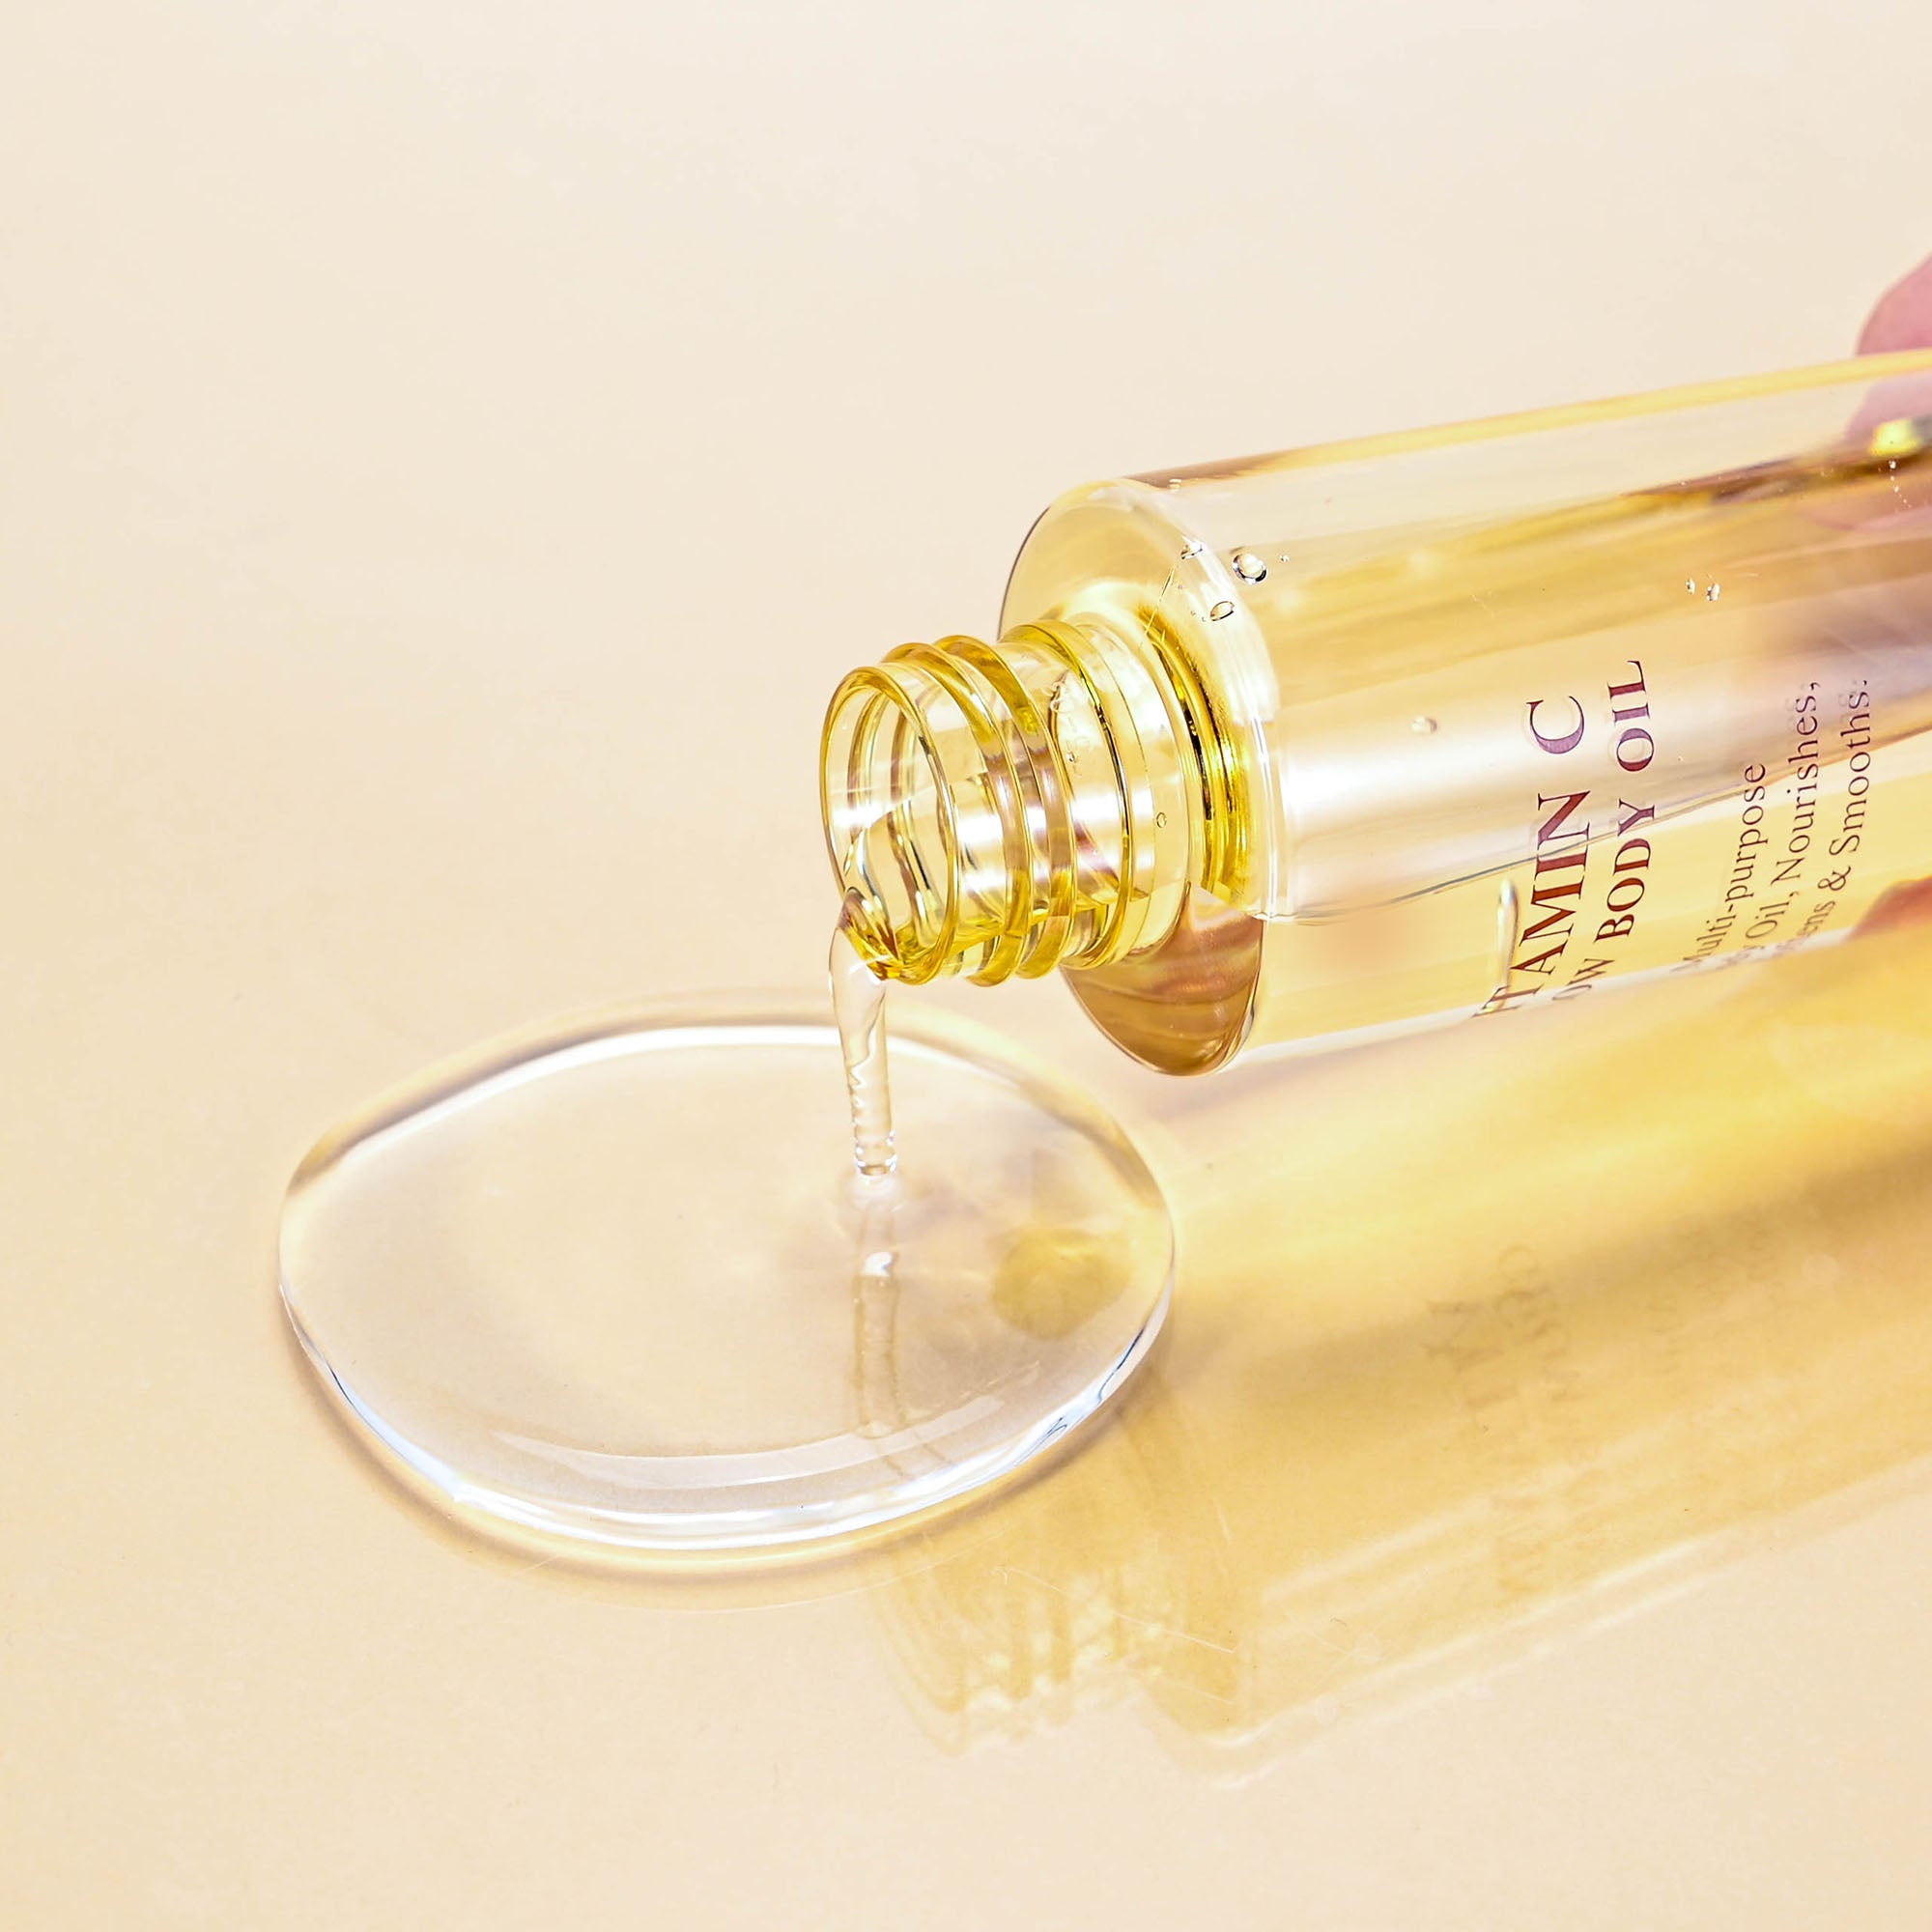 Neutriherbs Body Oil with Vitamin C, Rosehip & Vitamin E for Youthful Skin - 30ml - Neutriherbs SA